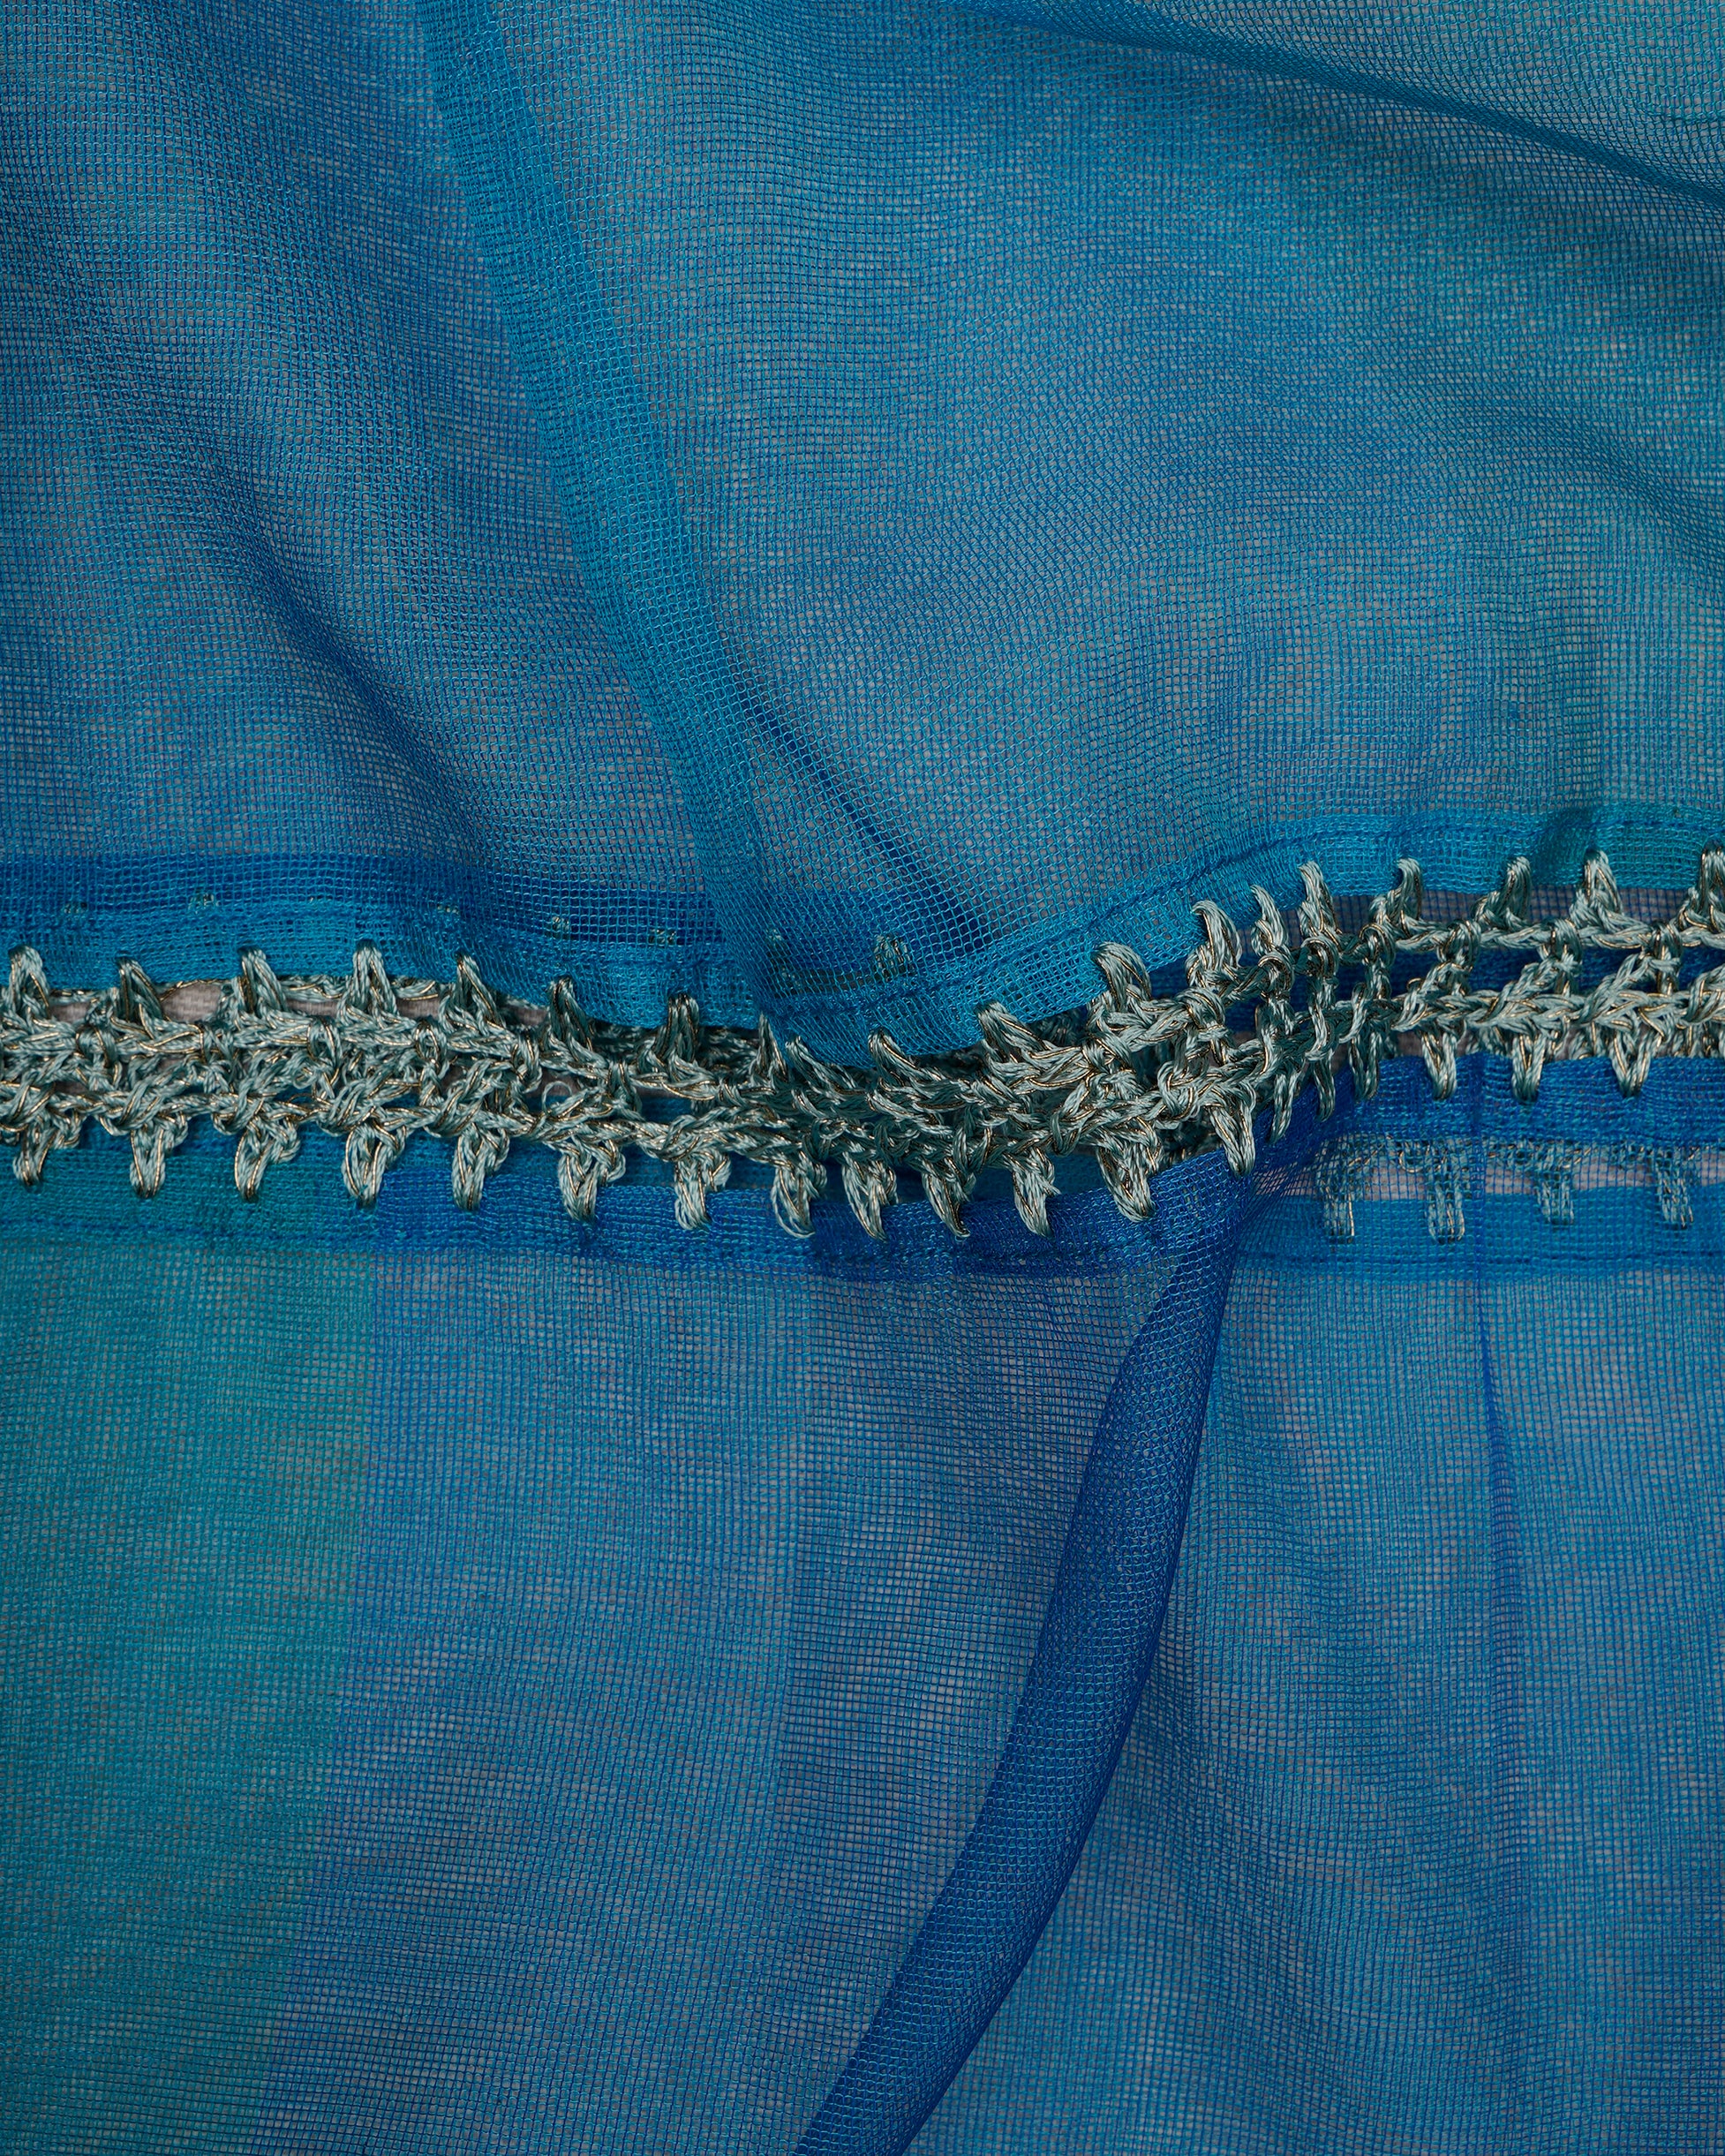 Blue Color Nylon Net Stole with Crochet Border